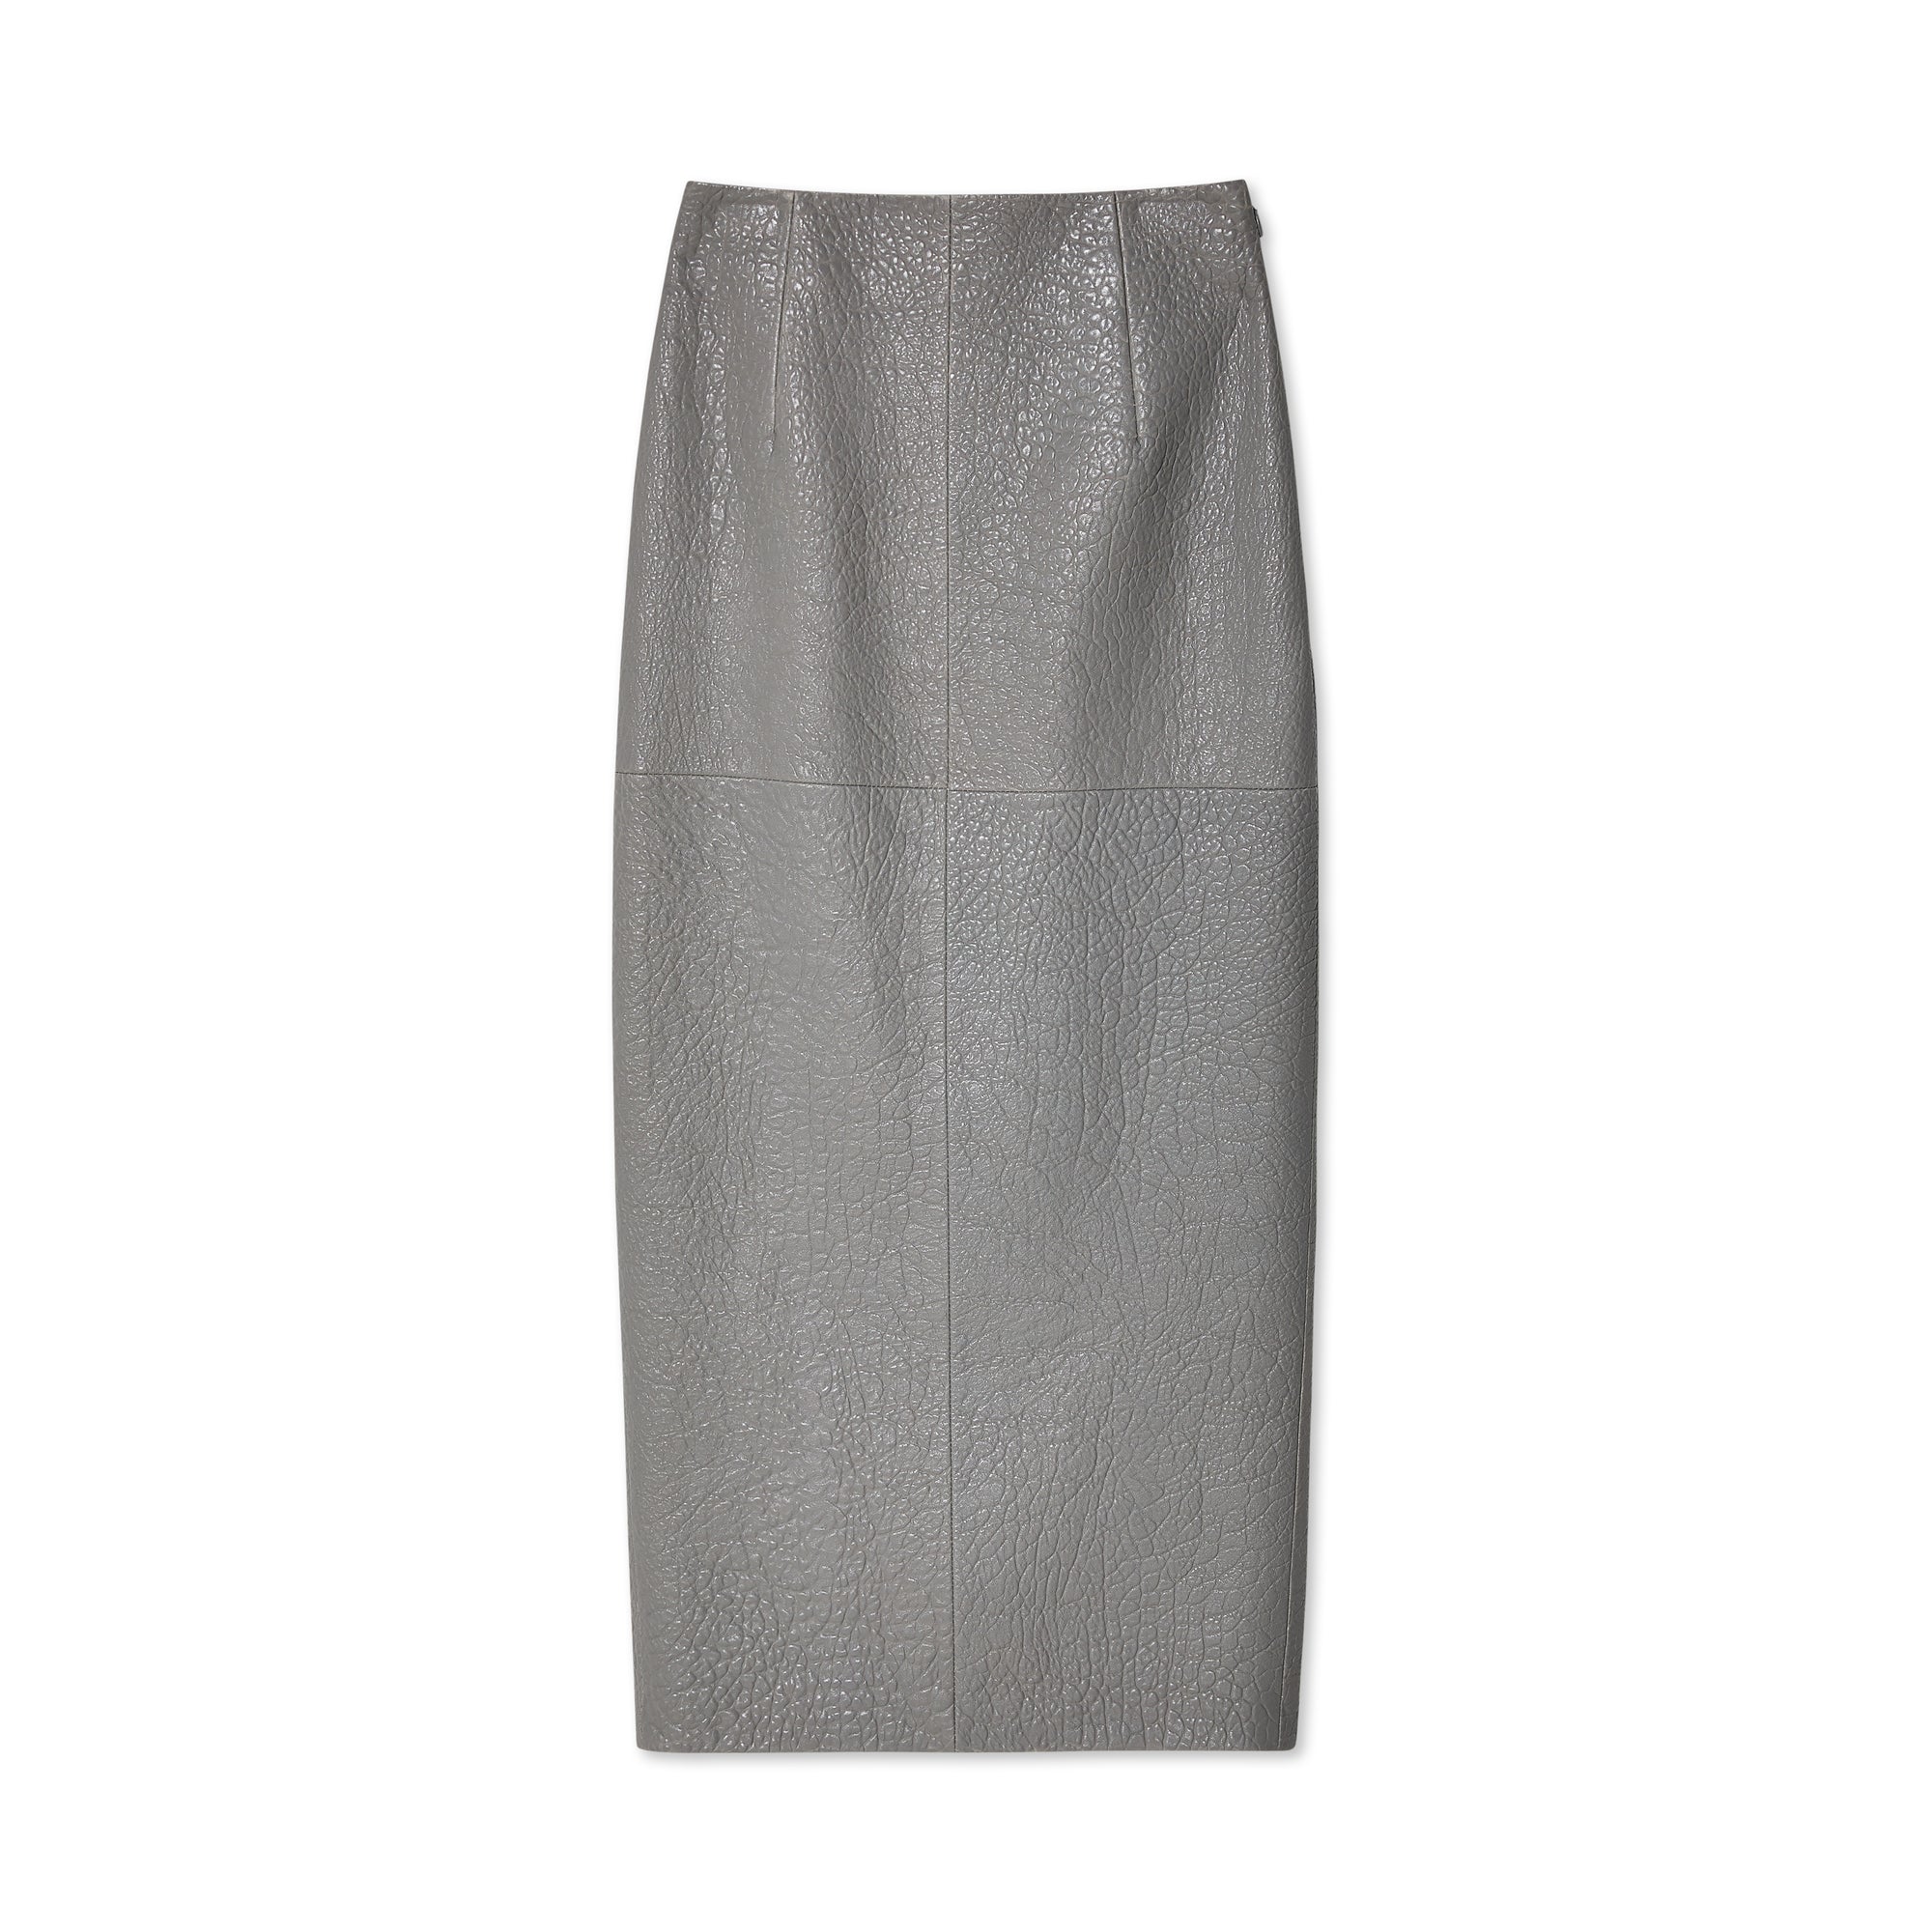 Prada - Women's Leather Skirt - (Grey) view 1